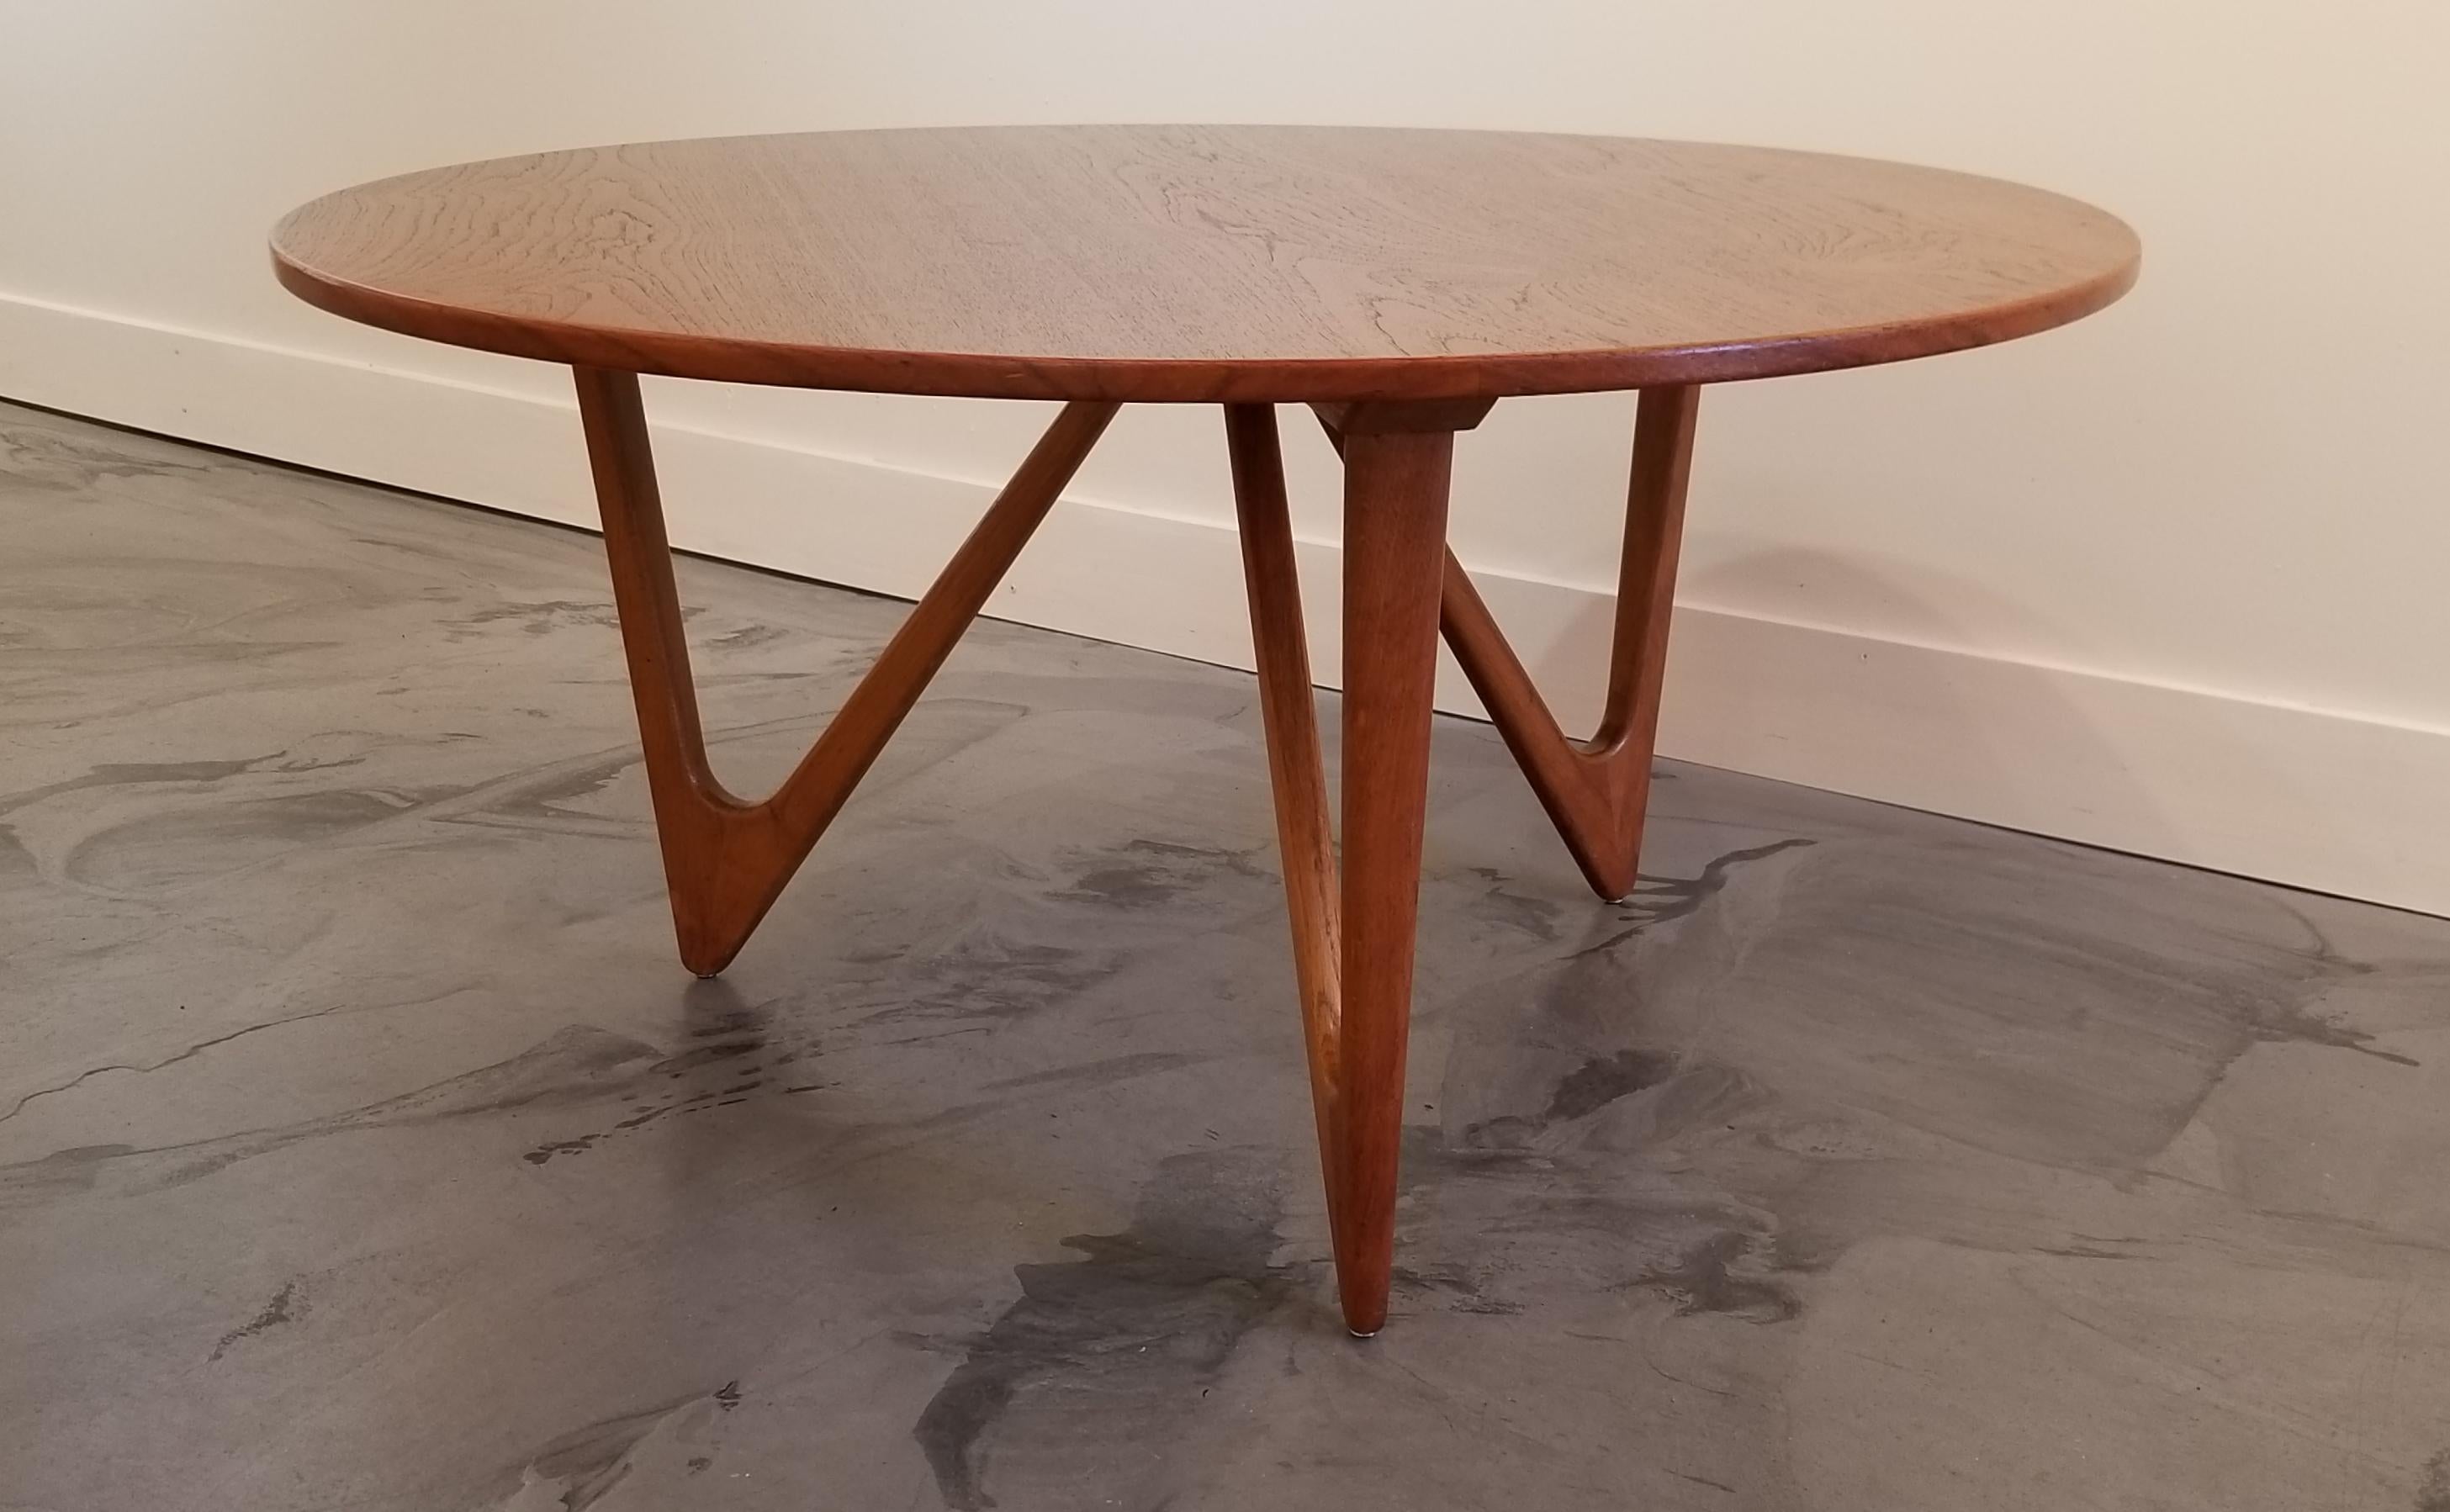 1960s Danish modern circular coffee or side table with 